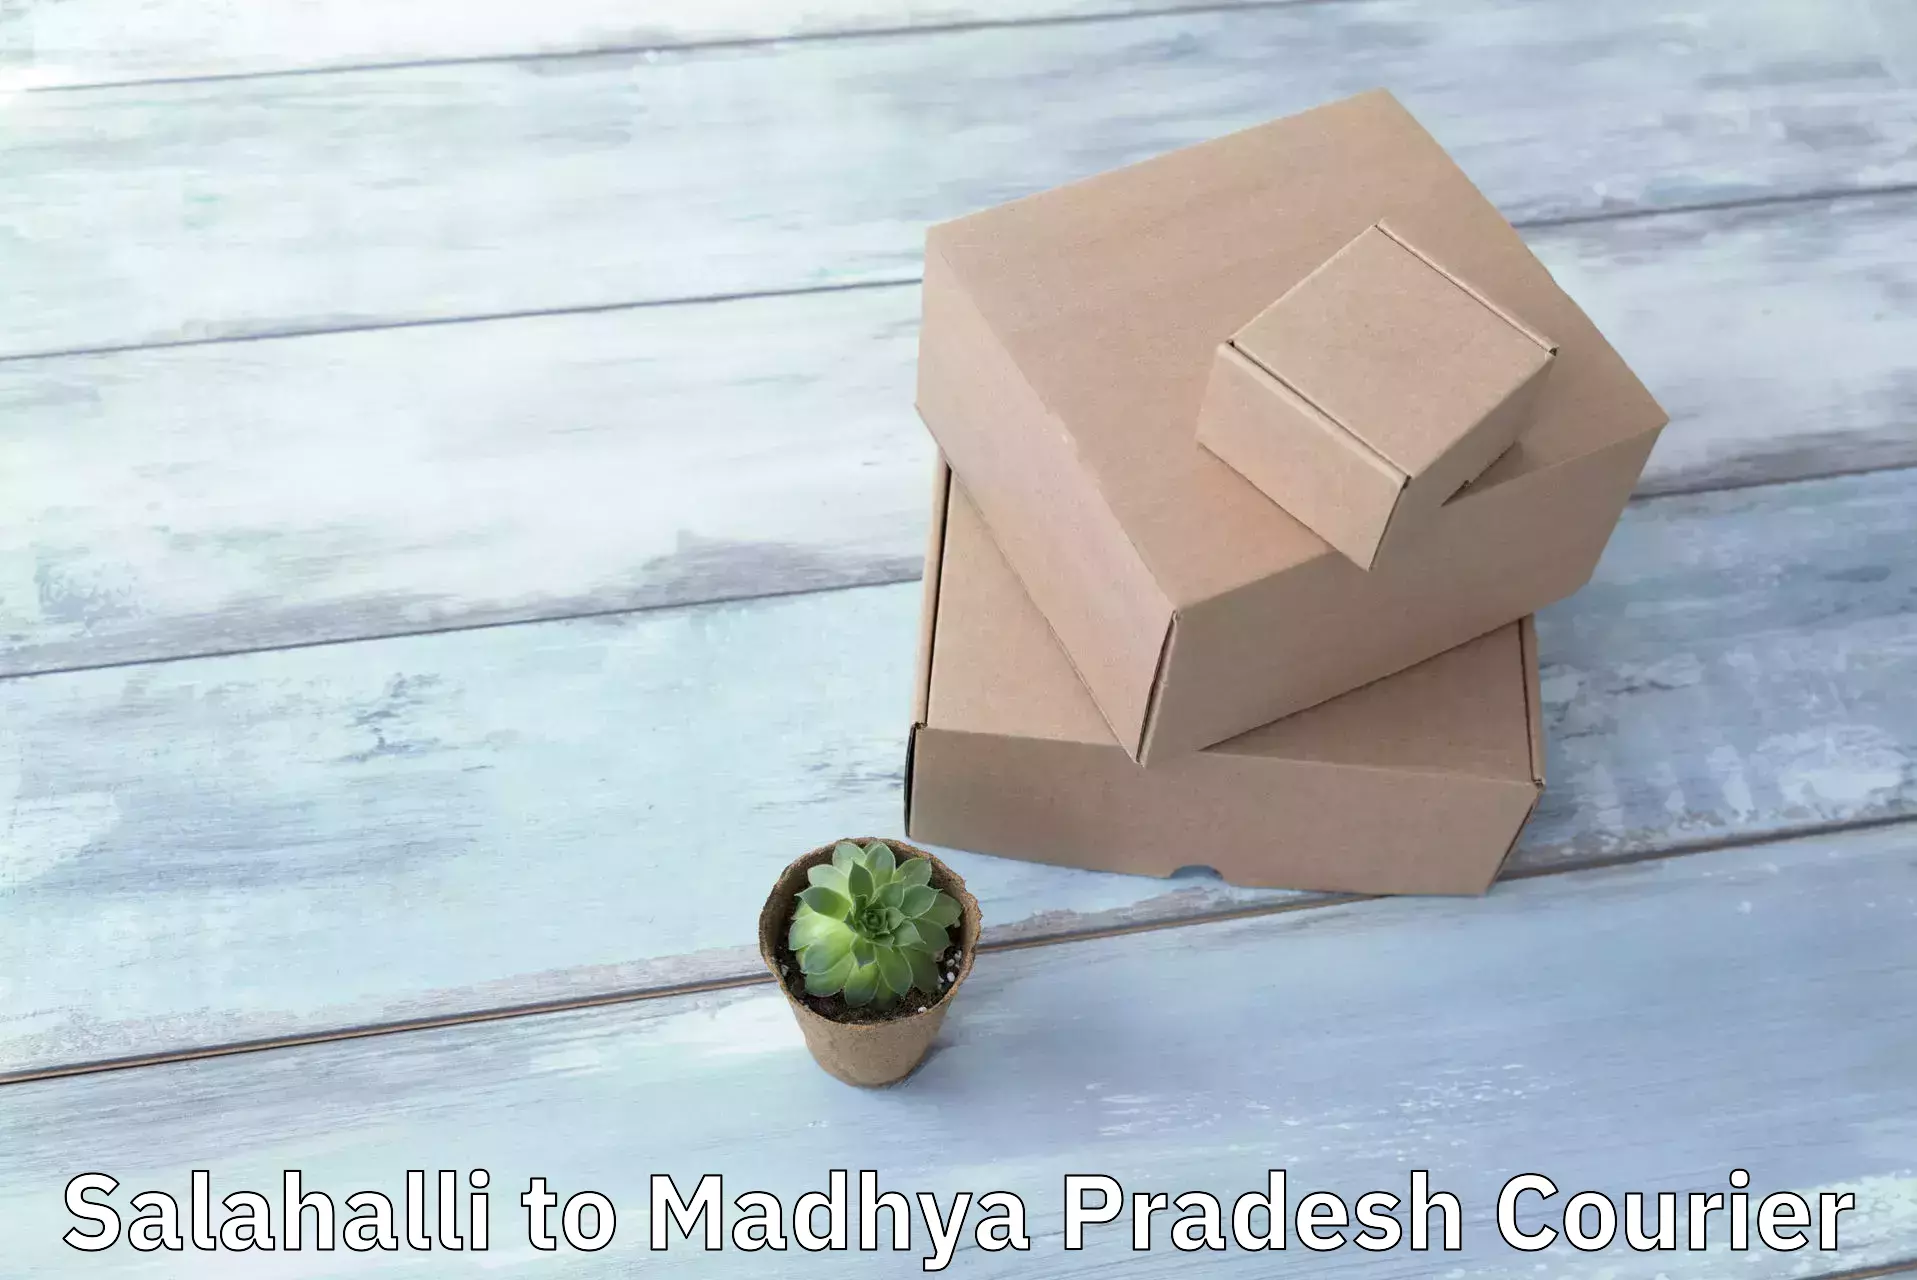 Package delivery network Salahalli to Madhya Pradesh